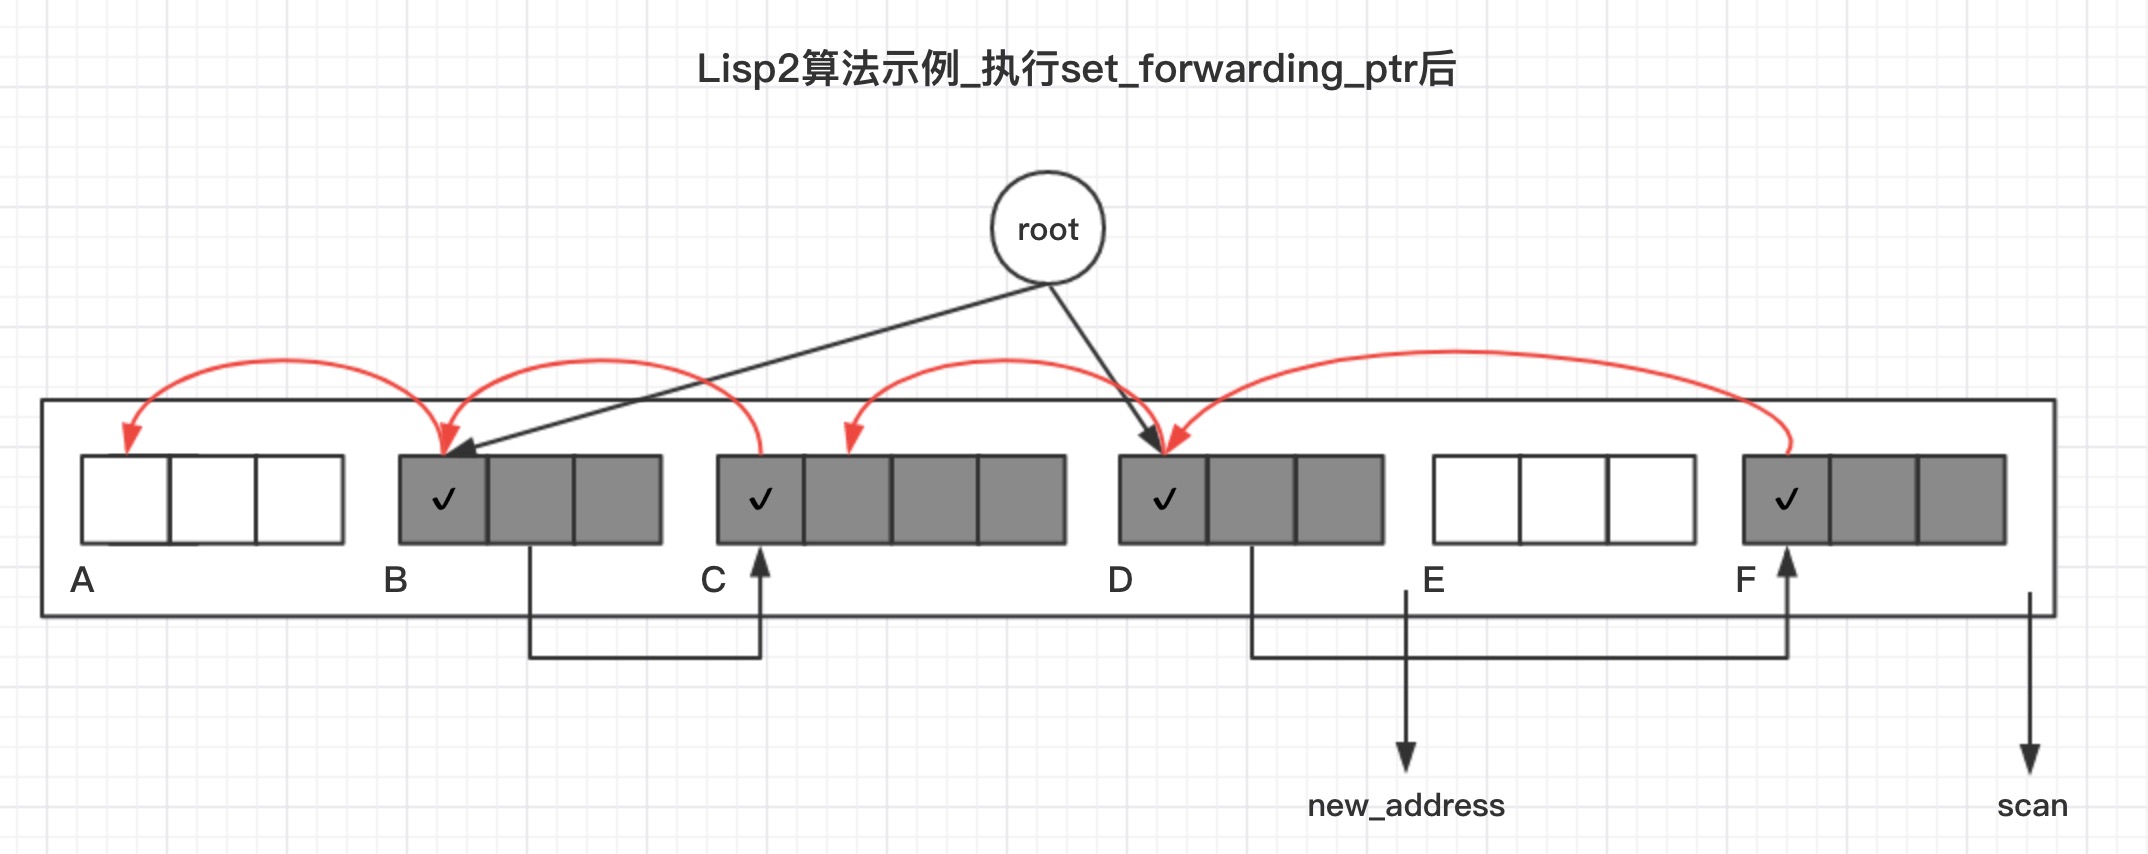 Lisp2算法示例_执行set_forwarding_ptr后